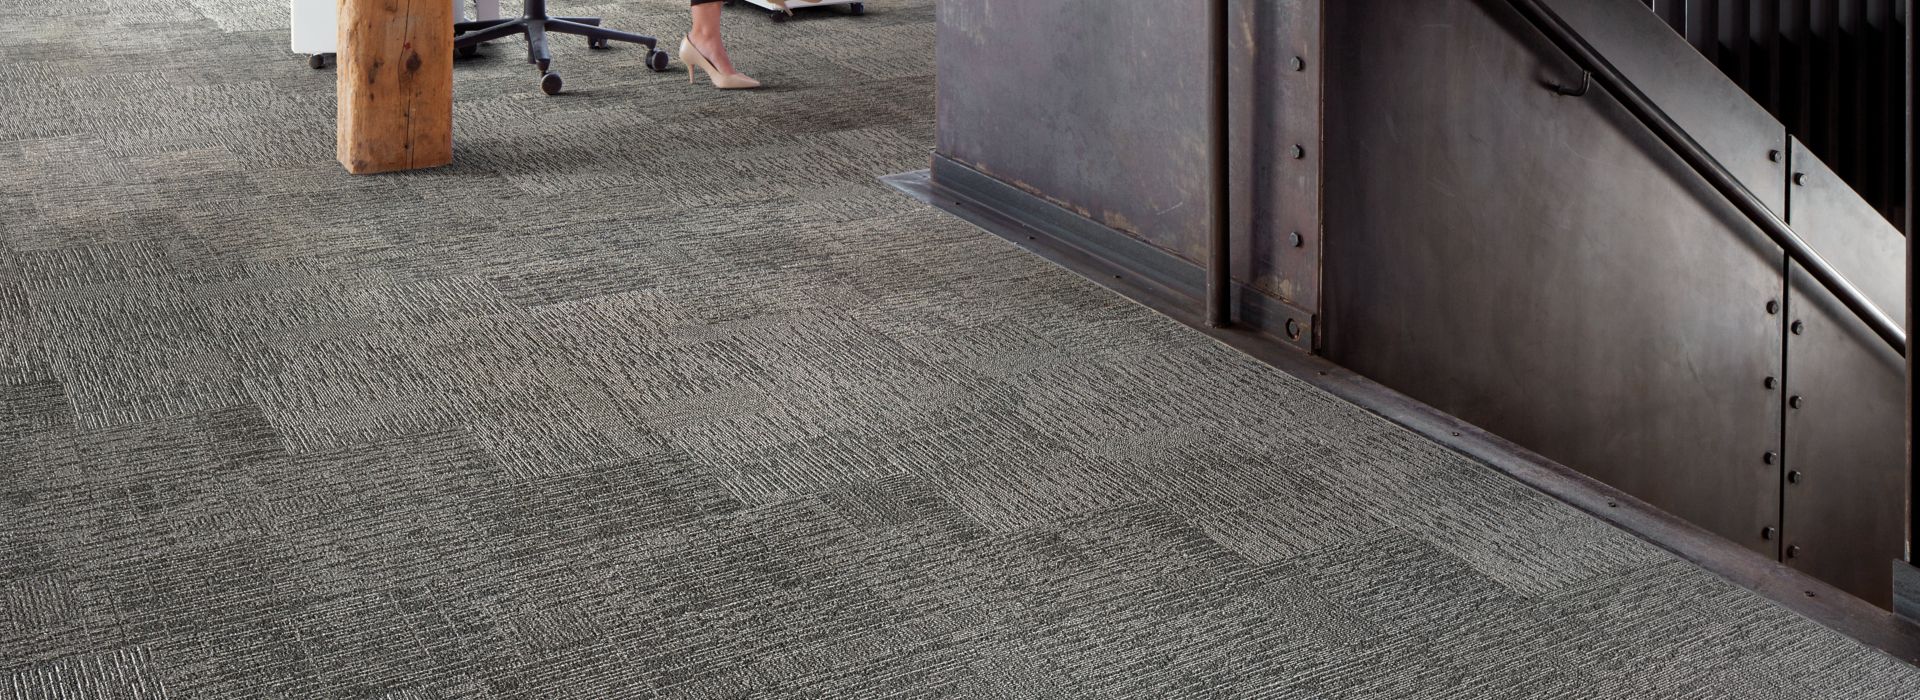 image Interface Zen Stitch plank carpet tile in open office setting numéro 1